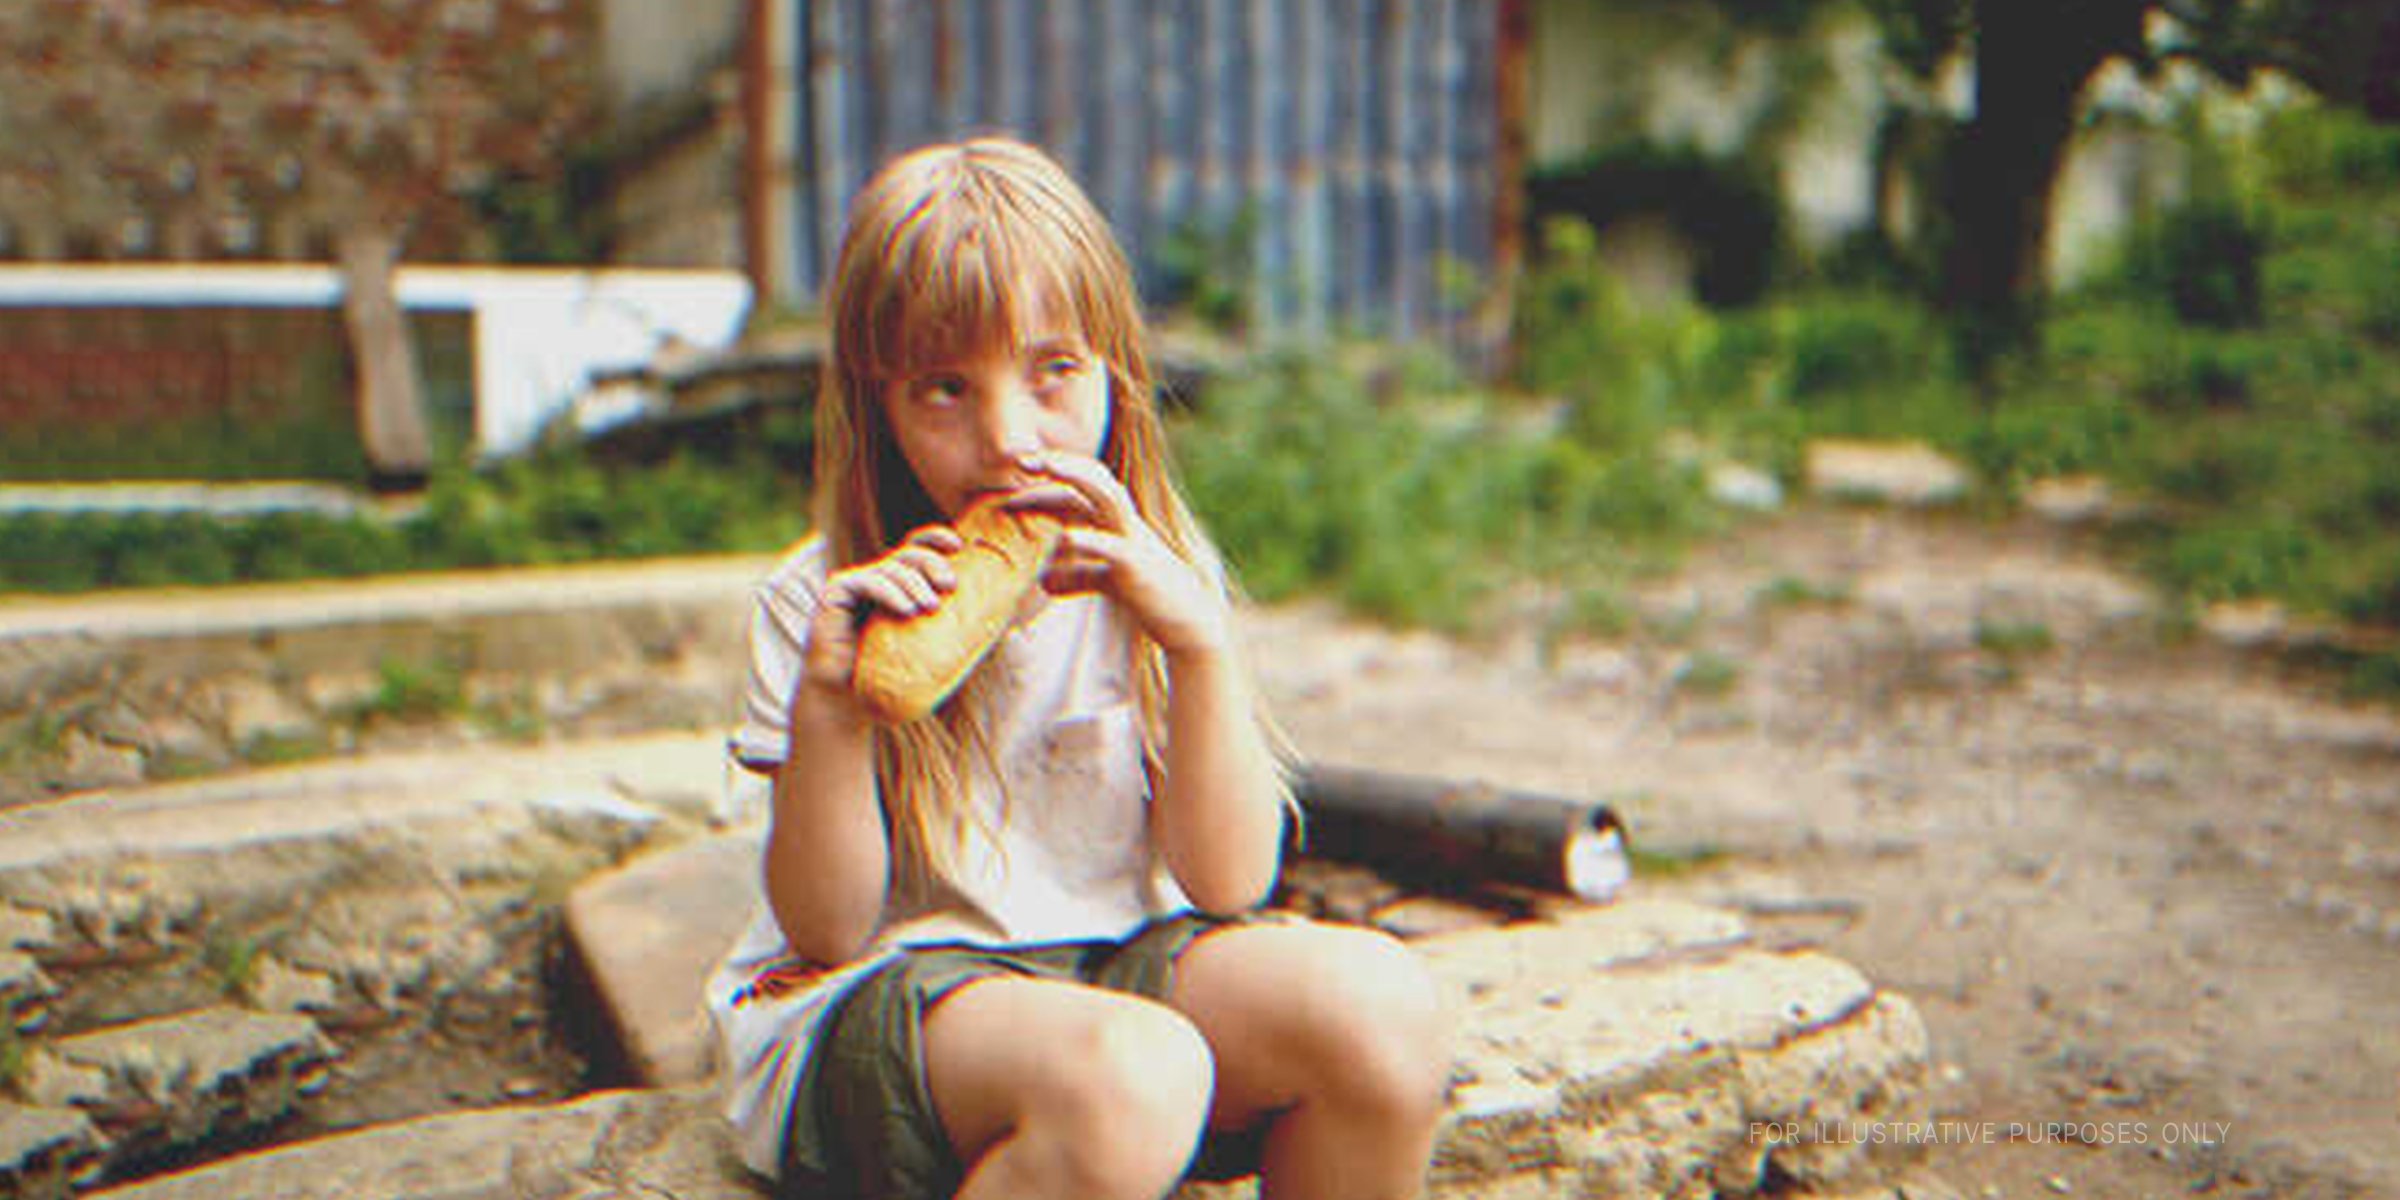 Girl eats sandwich | Source: Shutterstock